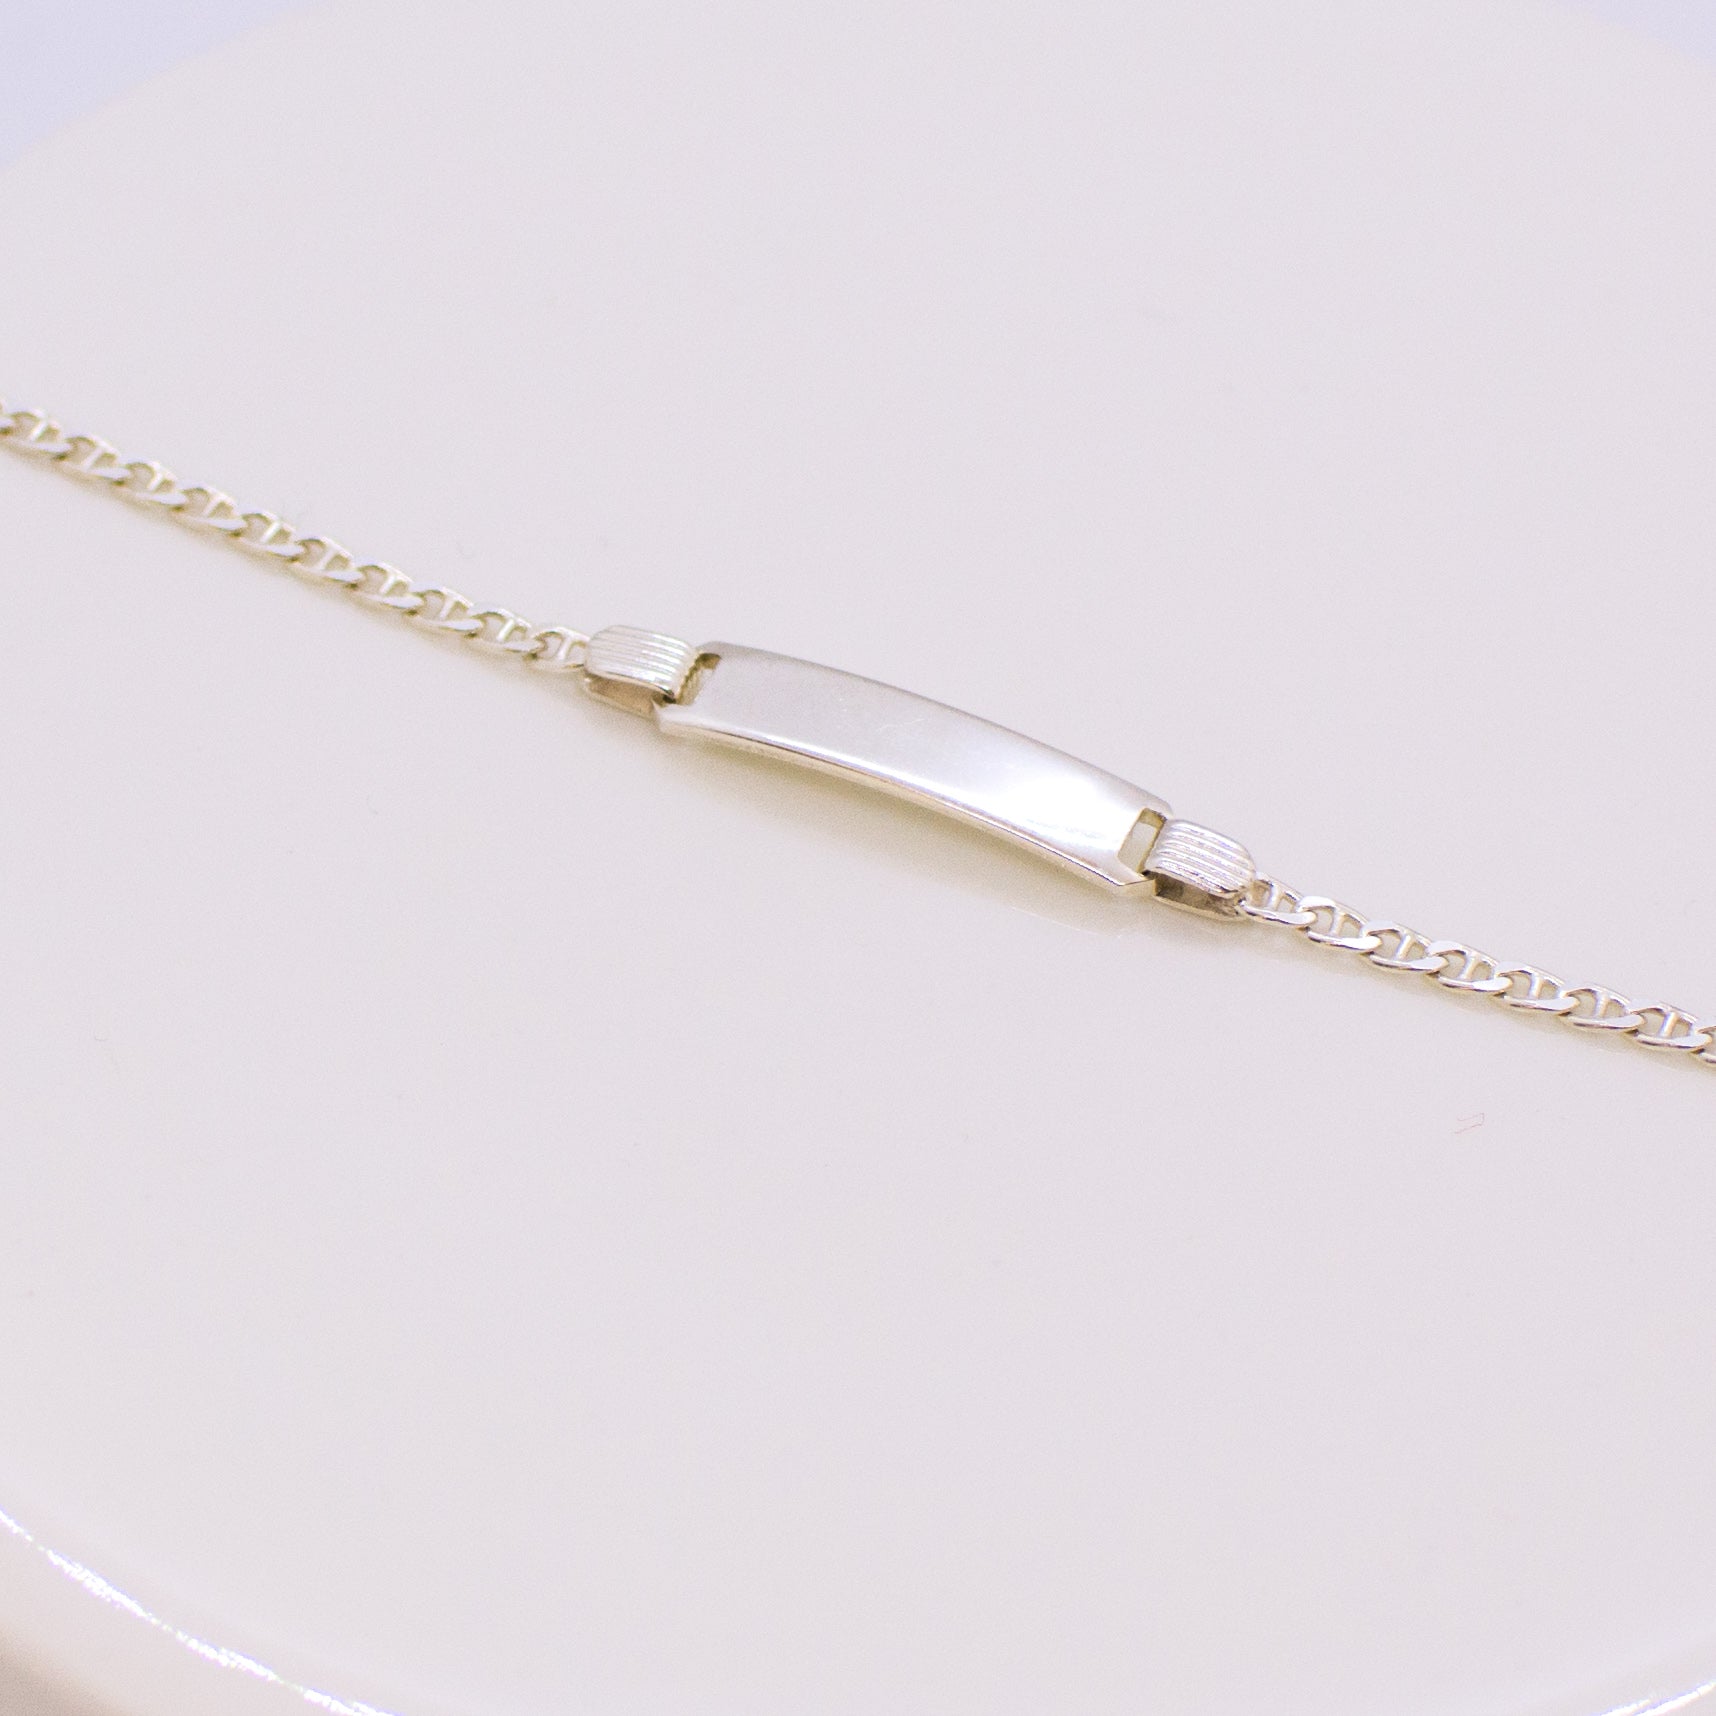 Silver Child's Identity Bracelet - Anchor Link 18cm - John Ross Jewellers